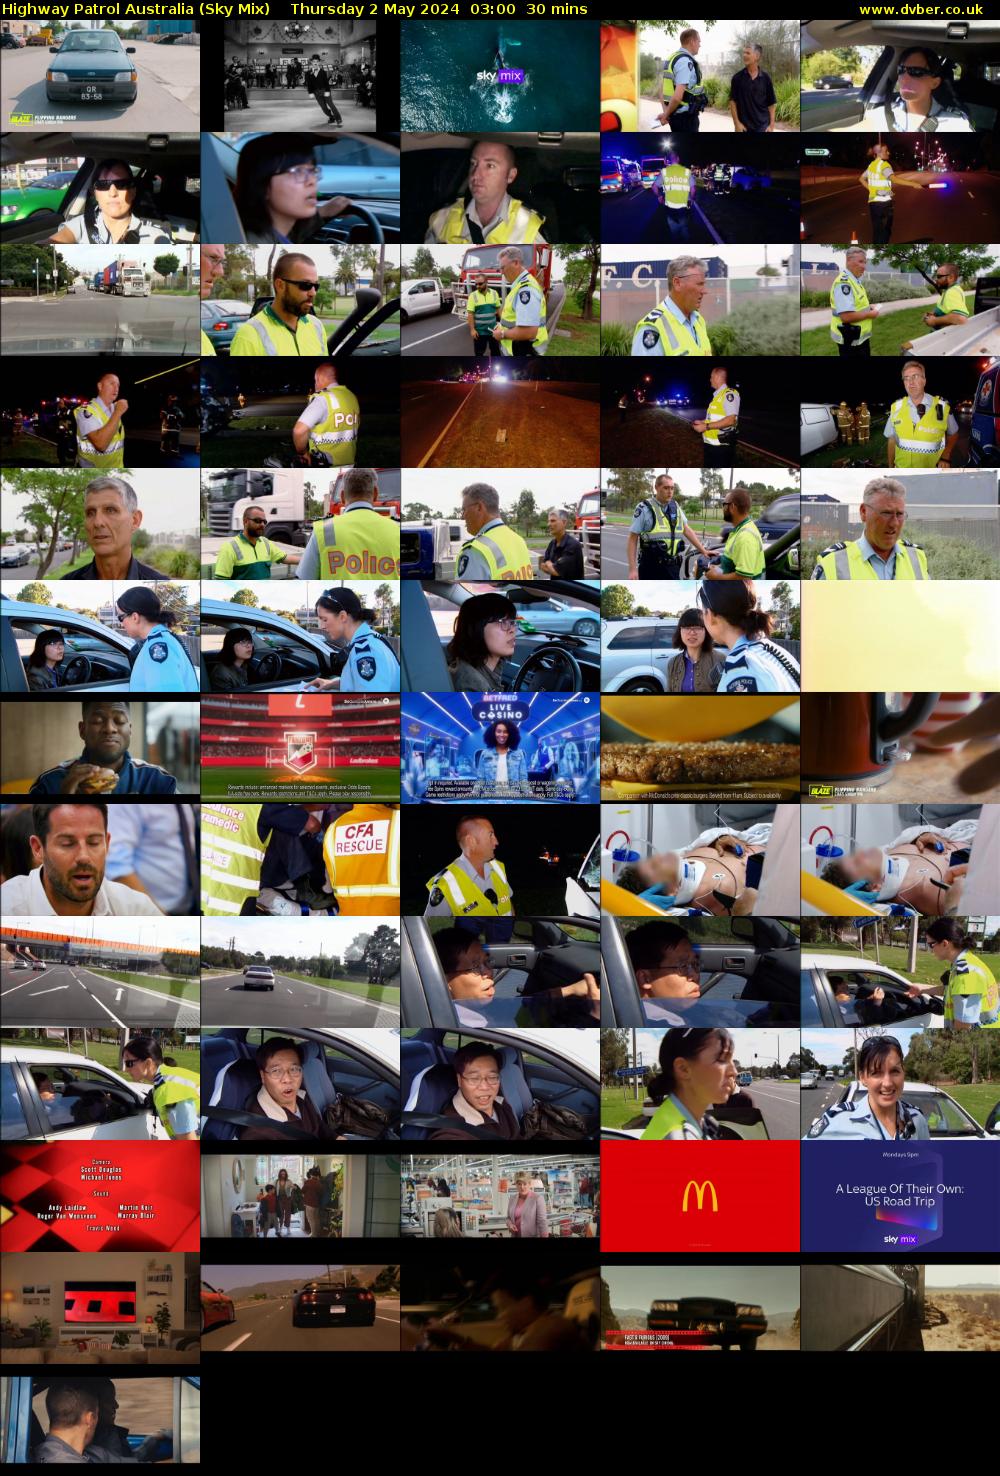 Highway Patrol Australia (Sky Mix) Thursday 2 May 2024 03:00 - 03:30